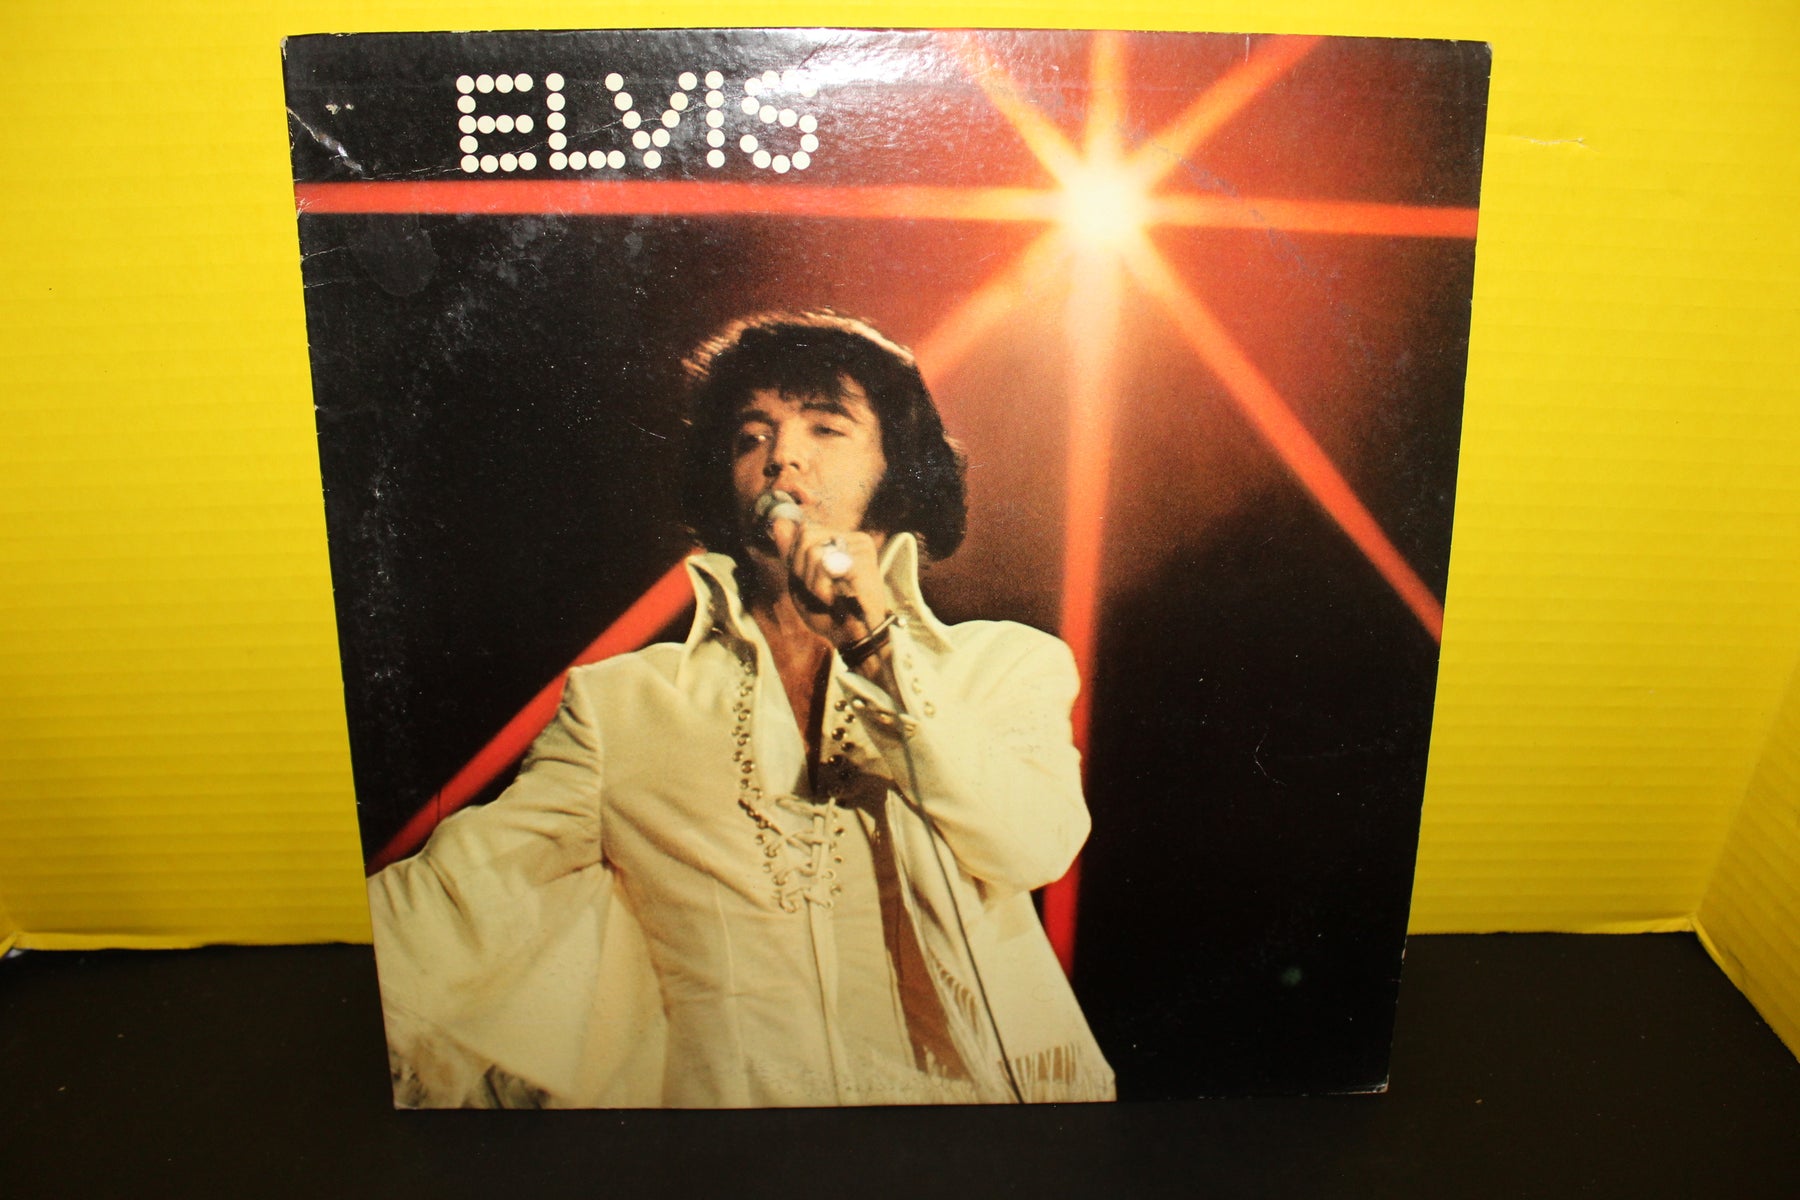 Elvis-You'll Never Walk Alone Vinyl Record